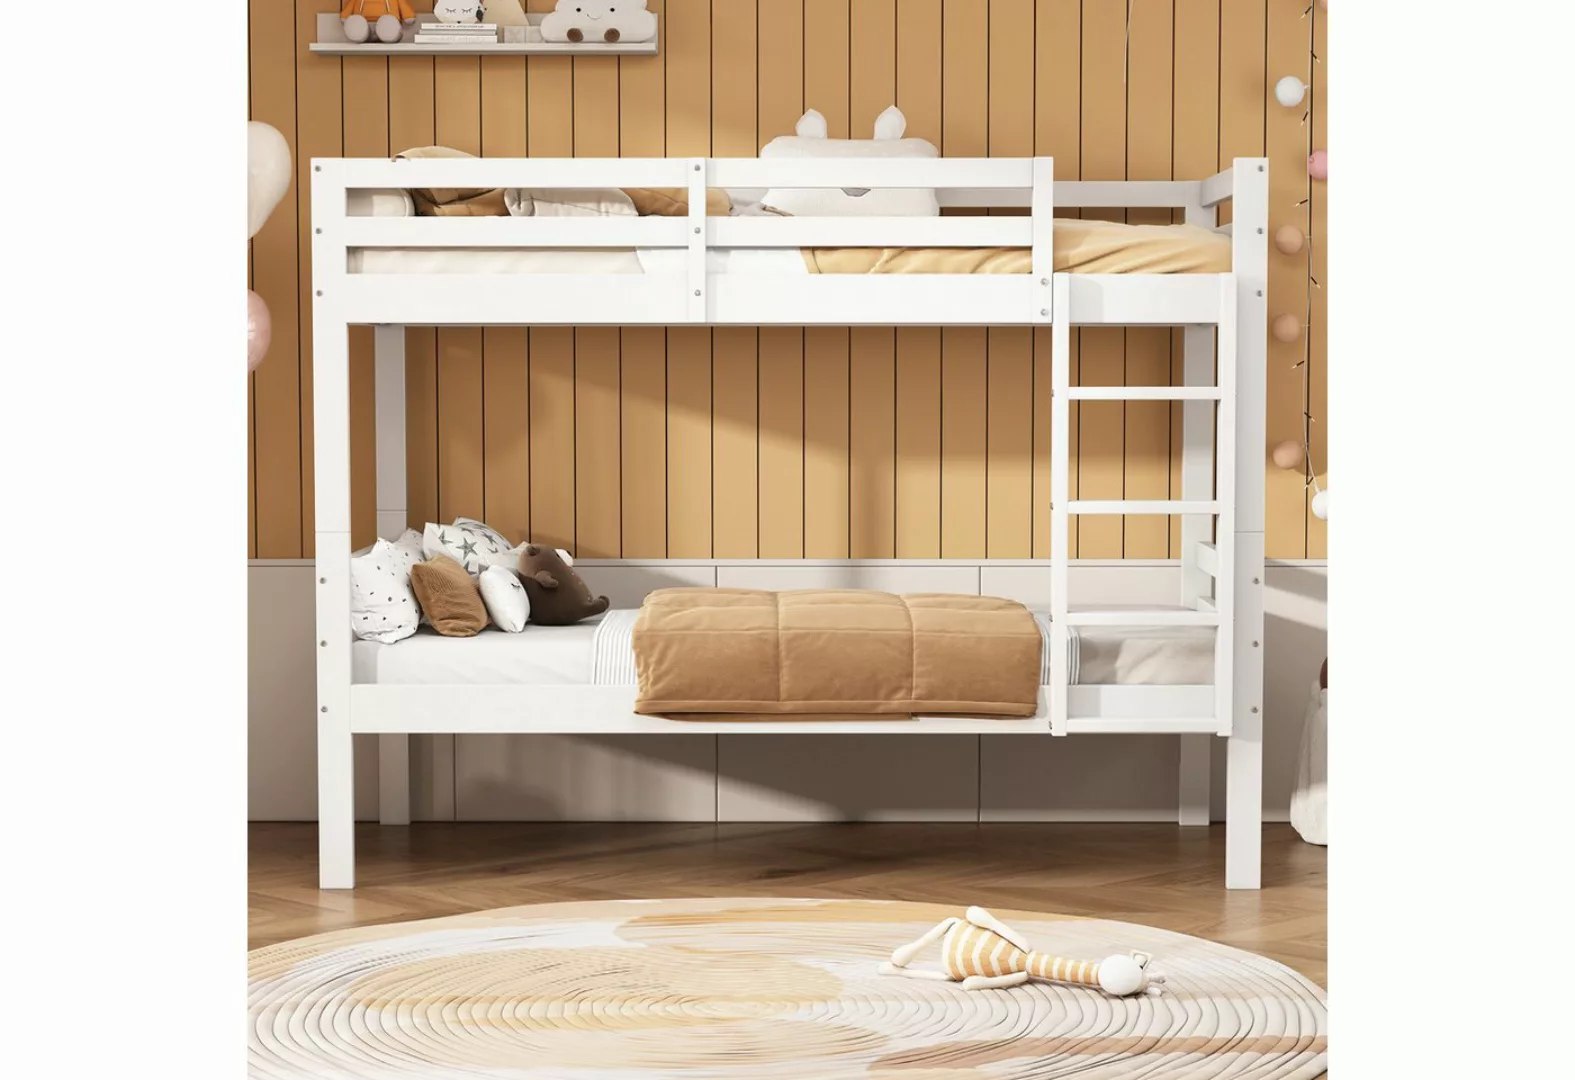 MODFU Etagenbett Kinderbett Gästebett Holzbett (Kinderbett mit dreistufiger günstig online kaufen